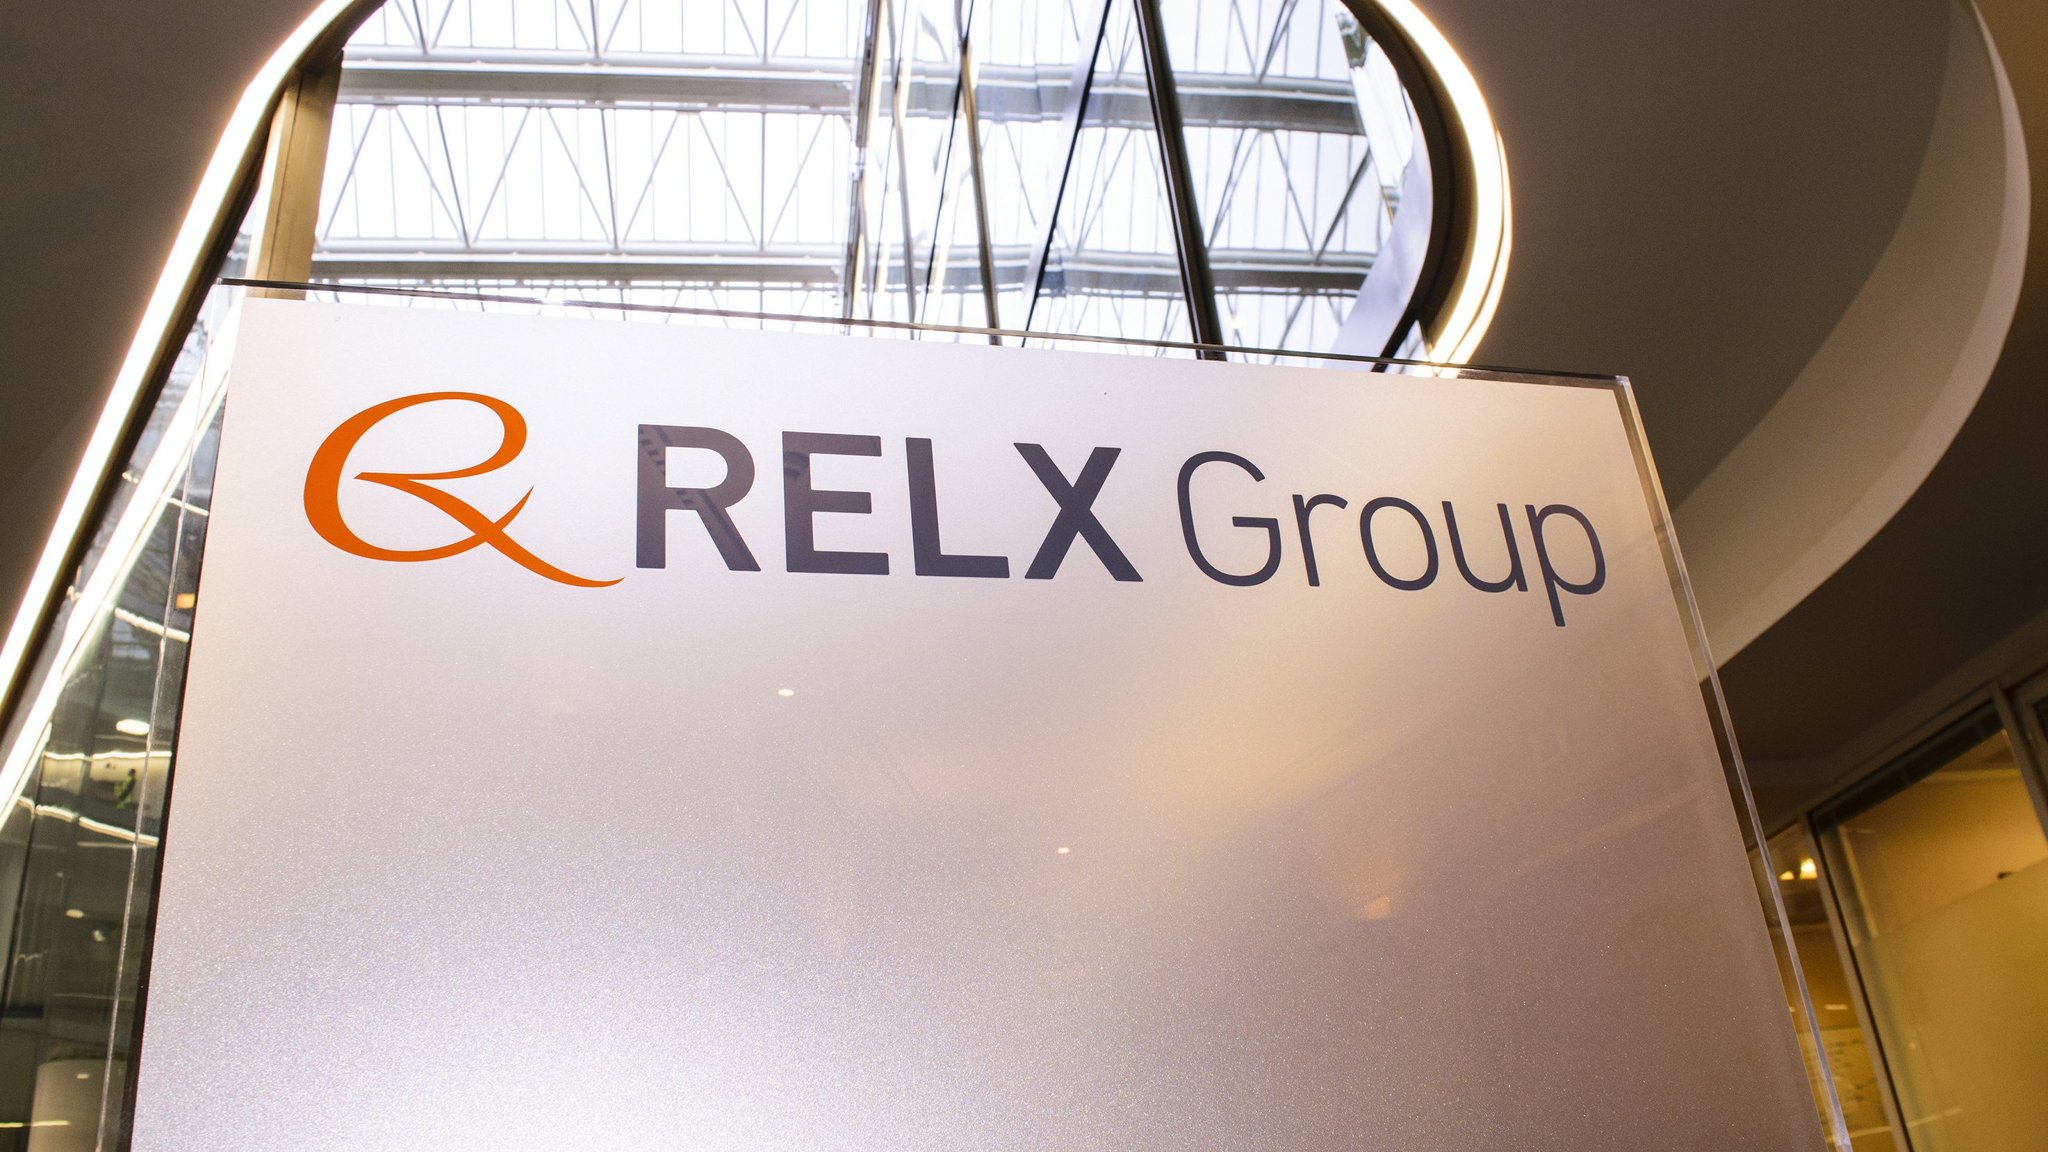 Relx logo on board in headquarters